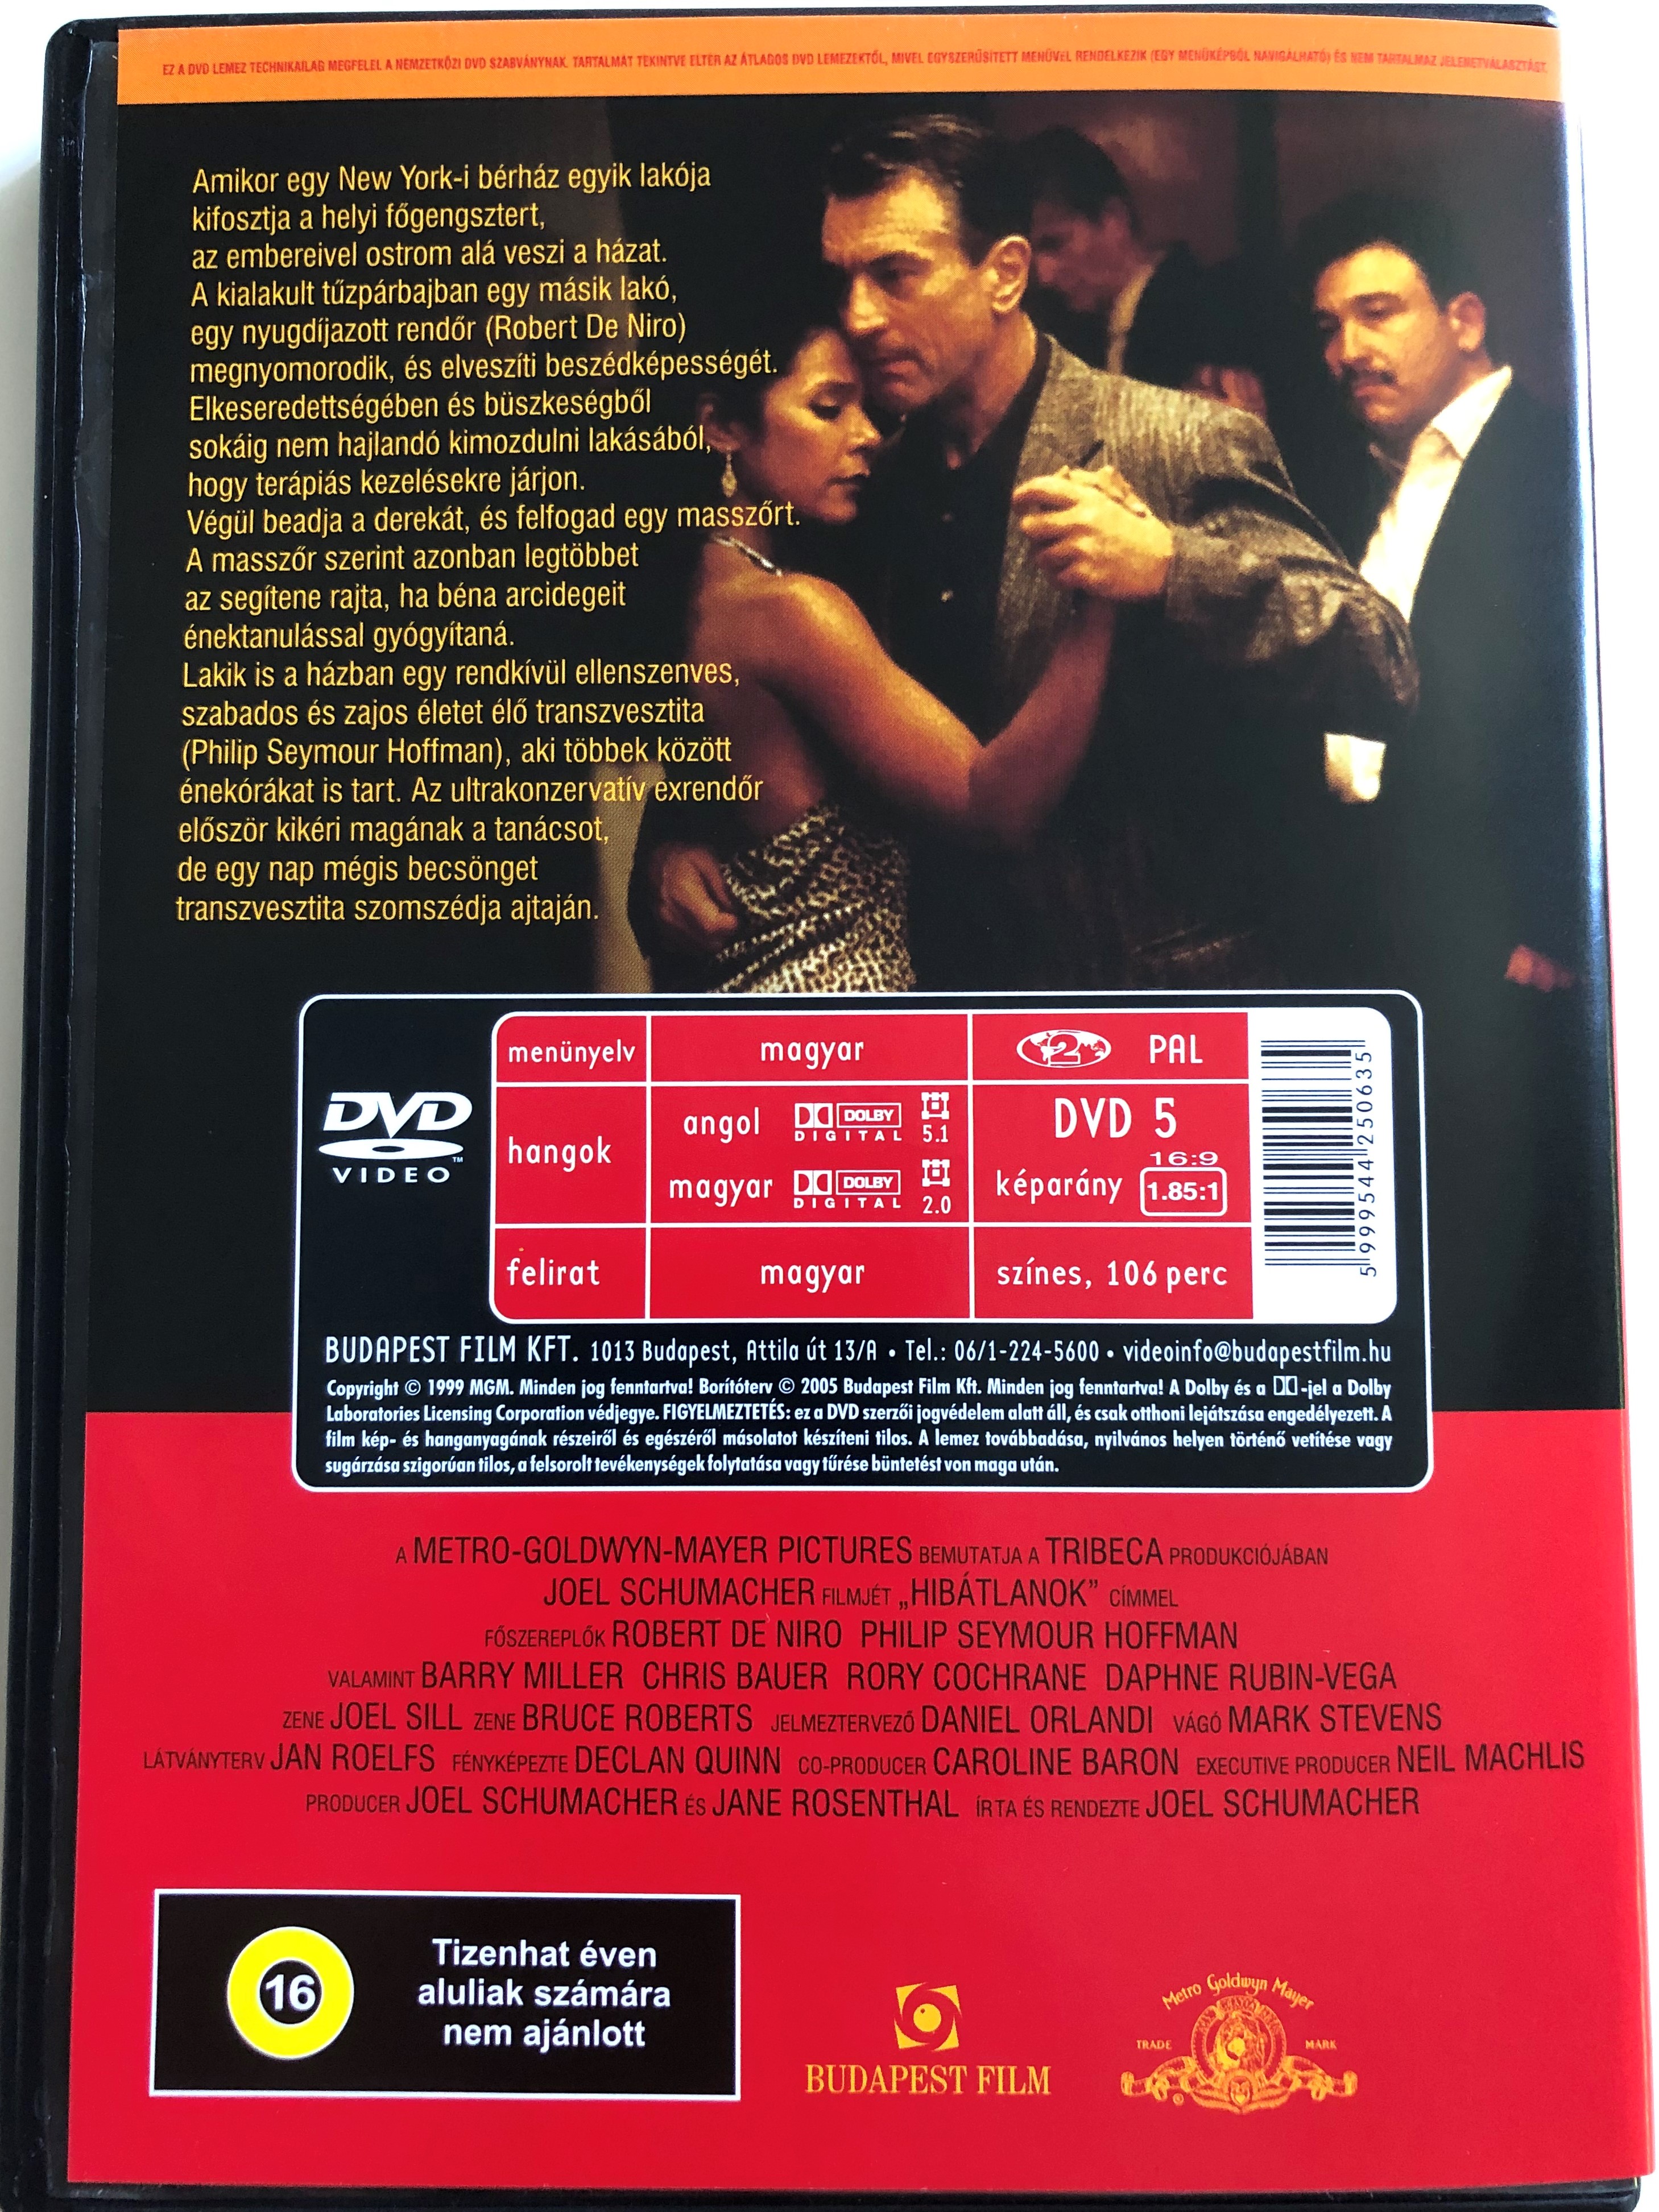 flawless-dvd-1999-hib-tlanok-directed-by-joel-schumacher-starring-philip-seymour-hoffman-robert-de-niro-barry-miller-chris-bauer-wilson-jermaine-heredia-daphne-rubin-vega-2-.jpg